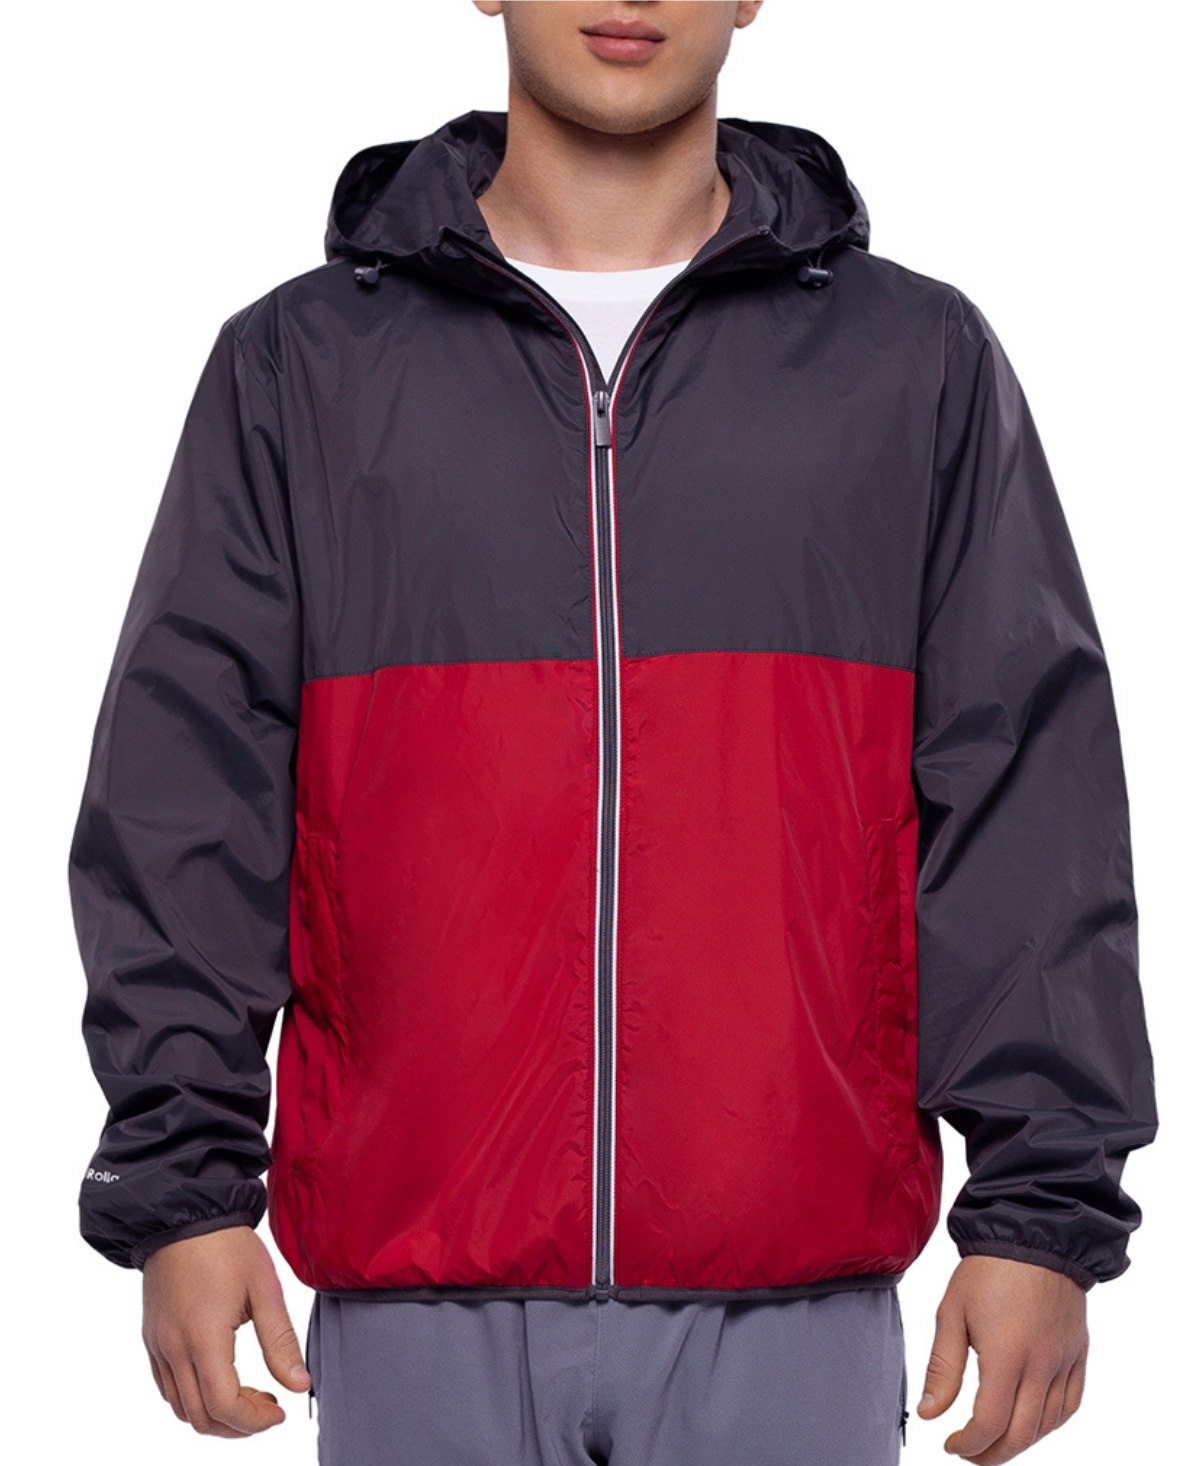 Men's Packable Mesh lined Lightweight Windbreaker Jacket - Gray red